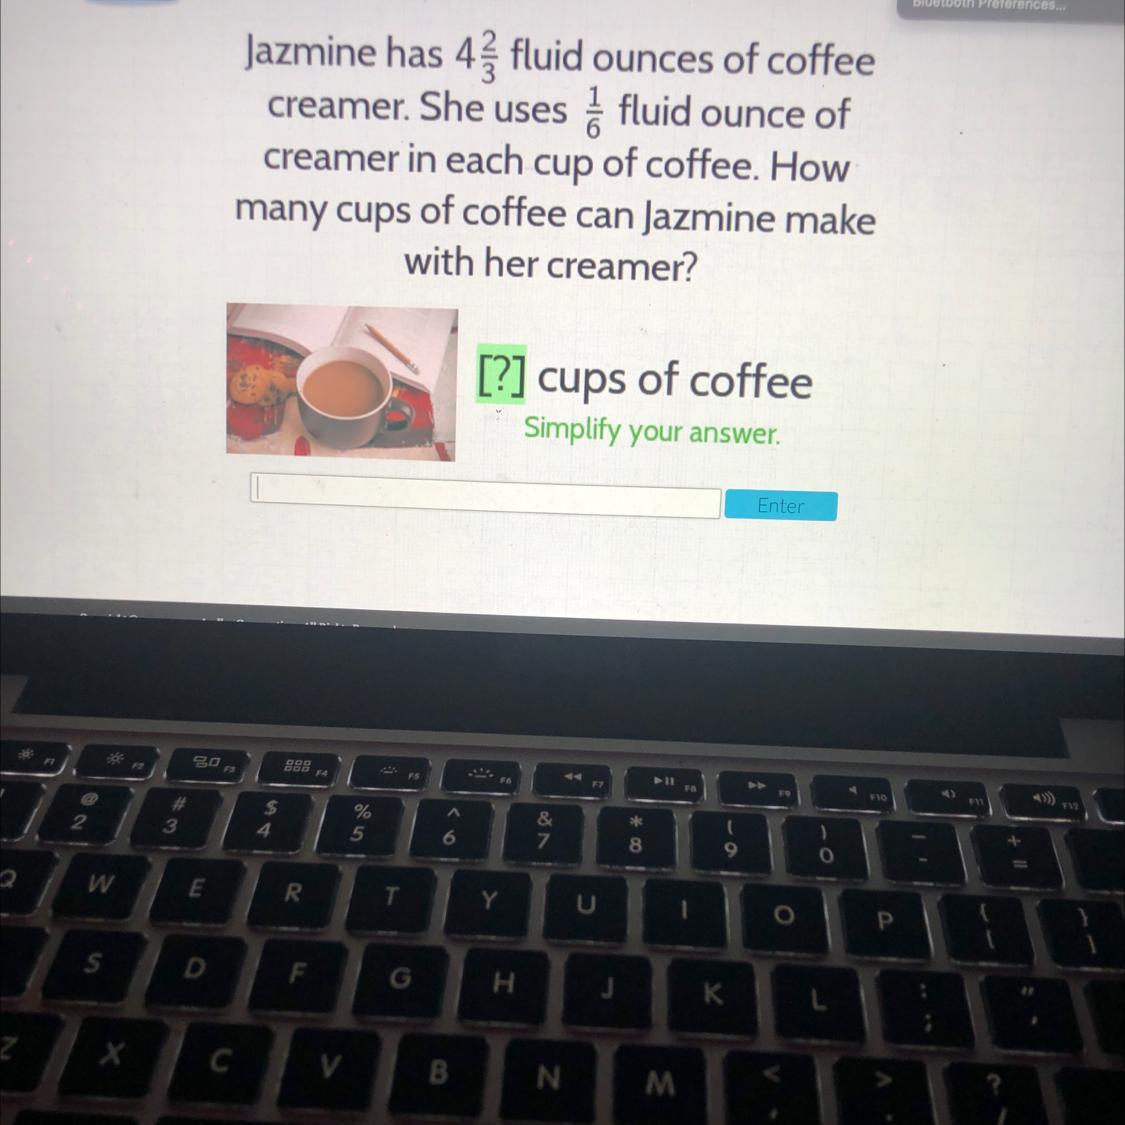 Jazmine Has 4 And 2/3 Fluid Ounces Of Coffee Creamer. She Uses 1/6 Fluid Ounce Of Creamer In Each Cup